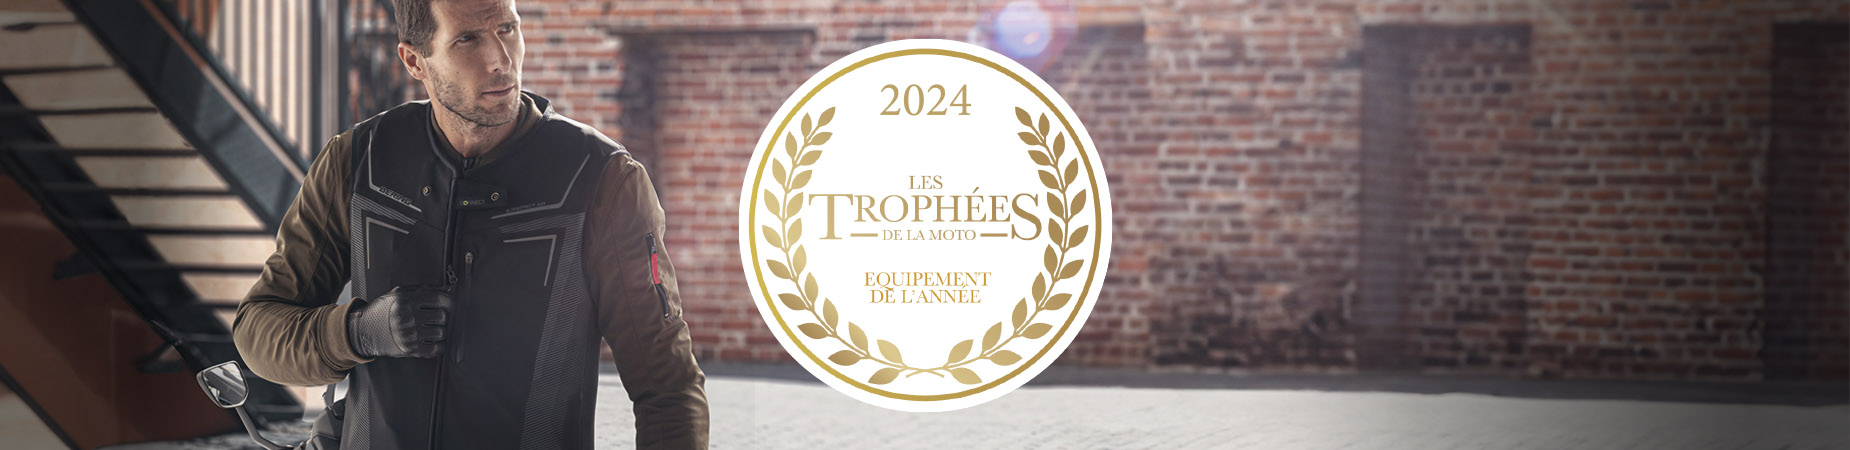 Innovation E-Protect Air equipment of the year "Trophées de la Moto 2024" - Bering